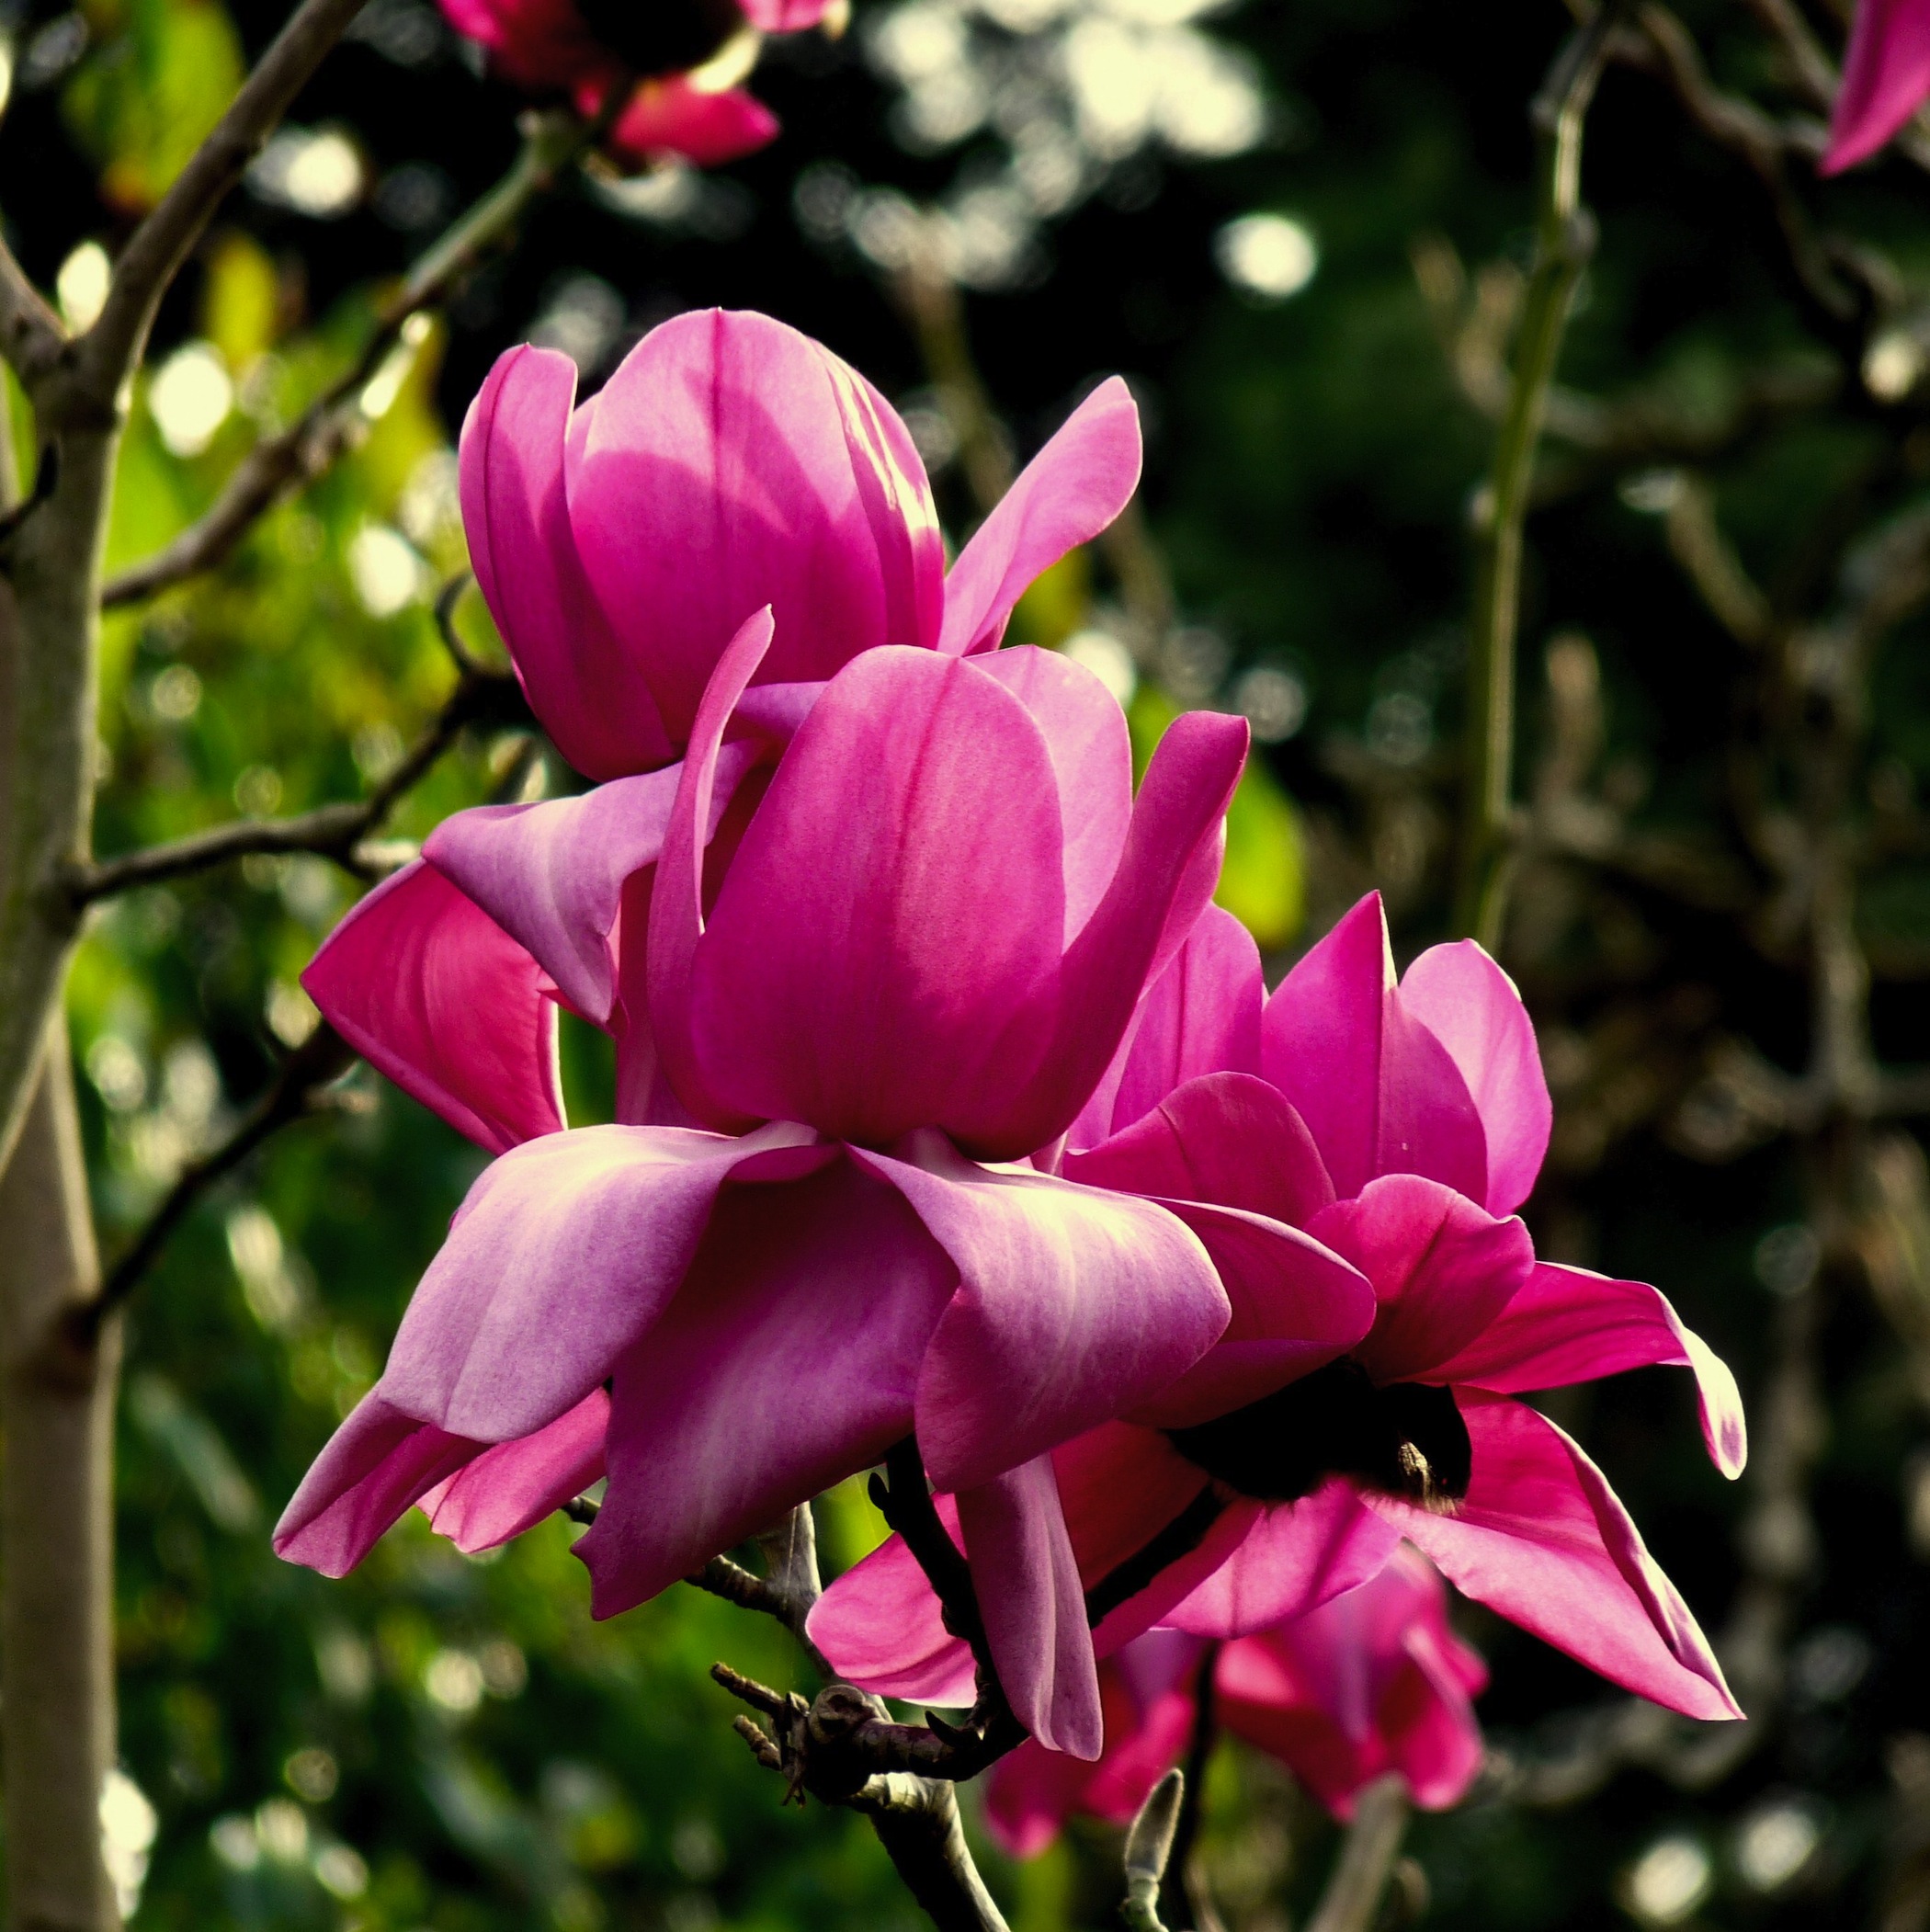 Magnolia campbellii 'Darjeeling'. Nancy Hwang